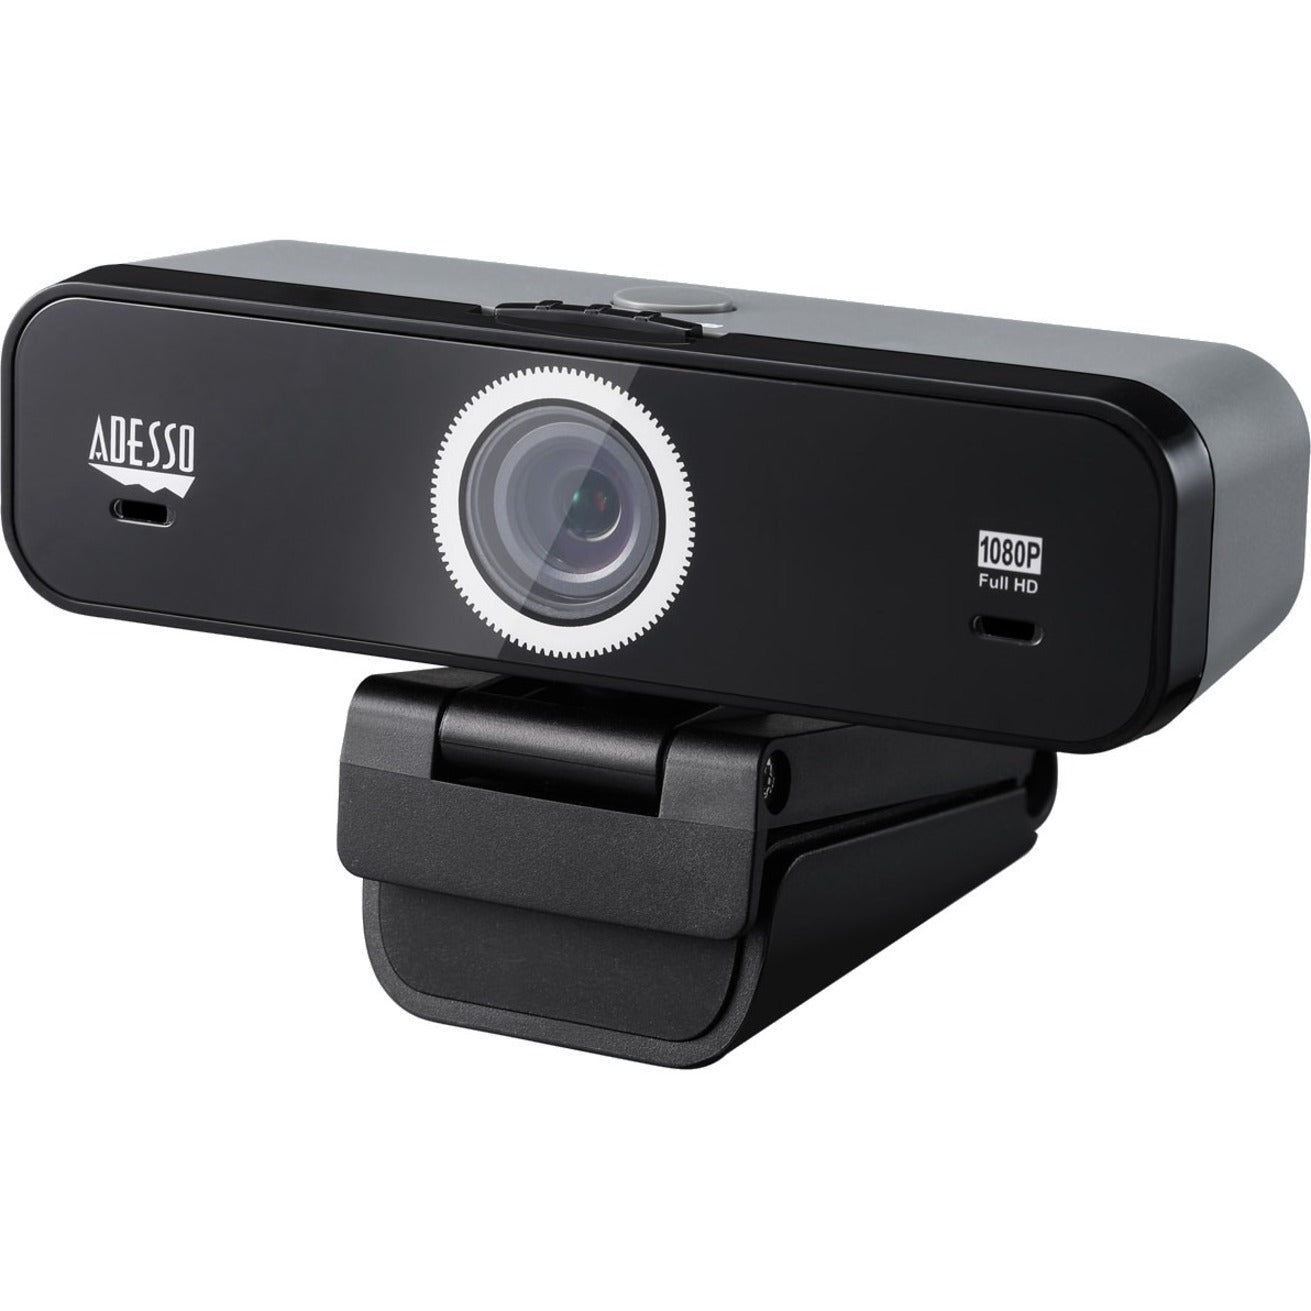 Adesso CyberTrack K1 Webcam - 2.1 Megapixel, 30 fps, USB 2.0